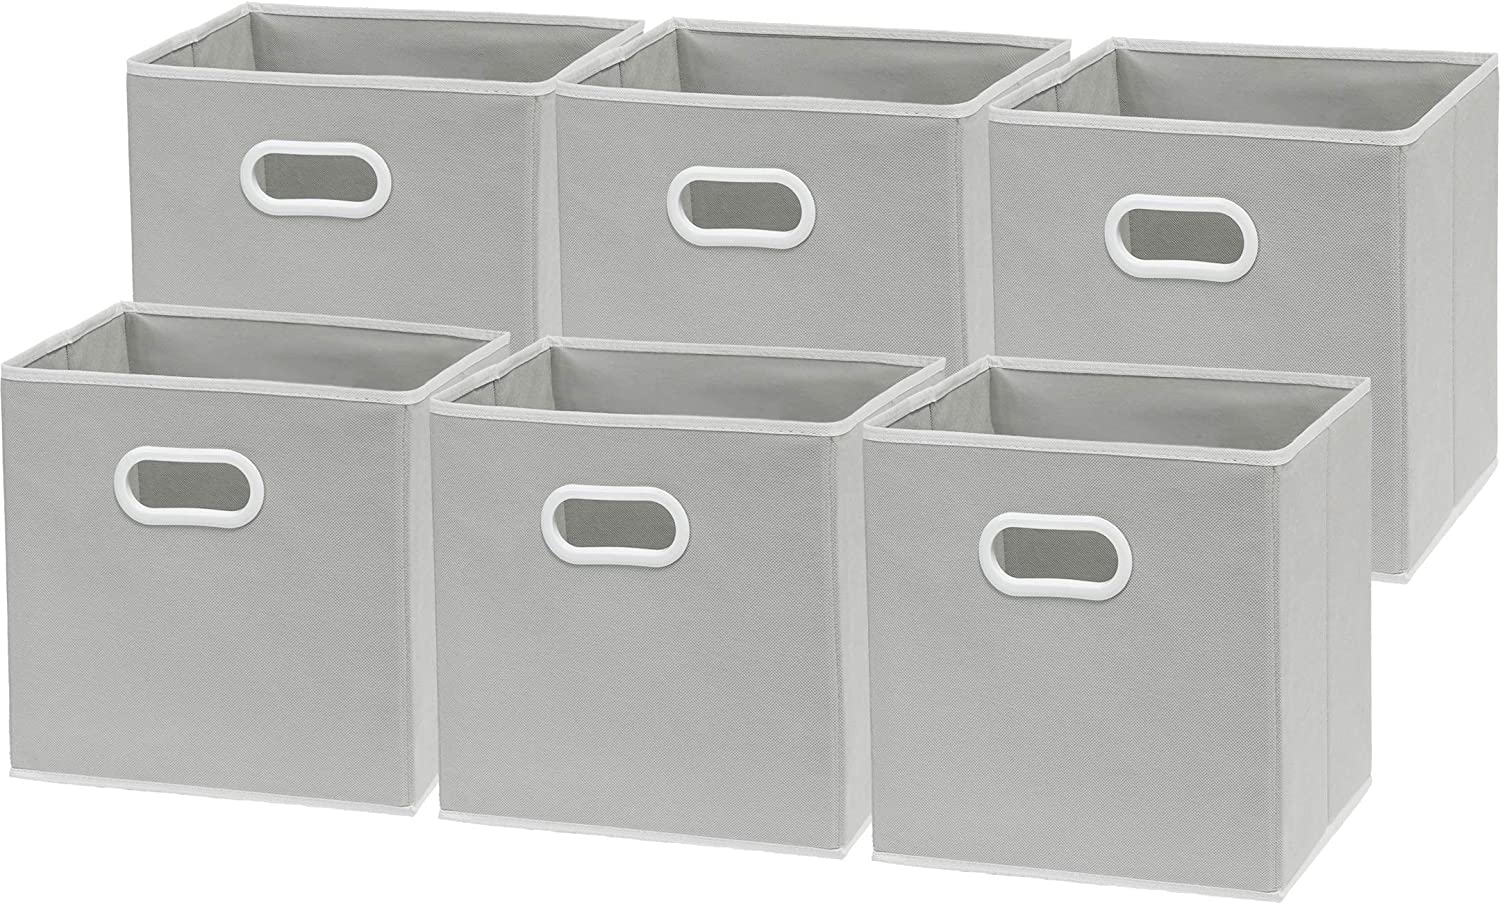 SimpleHouseware Foldable Cube Storage Bins, 6-Pack